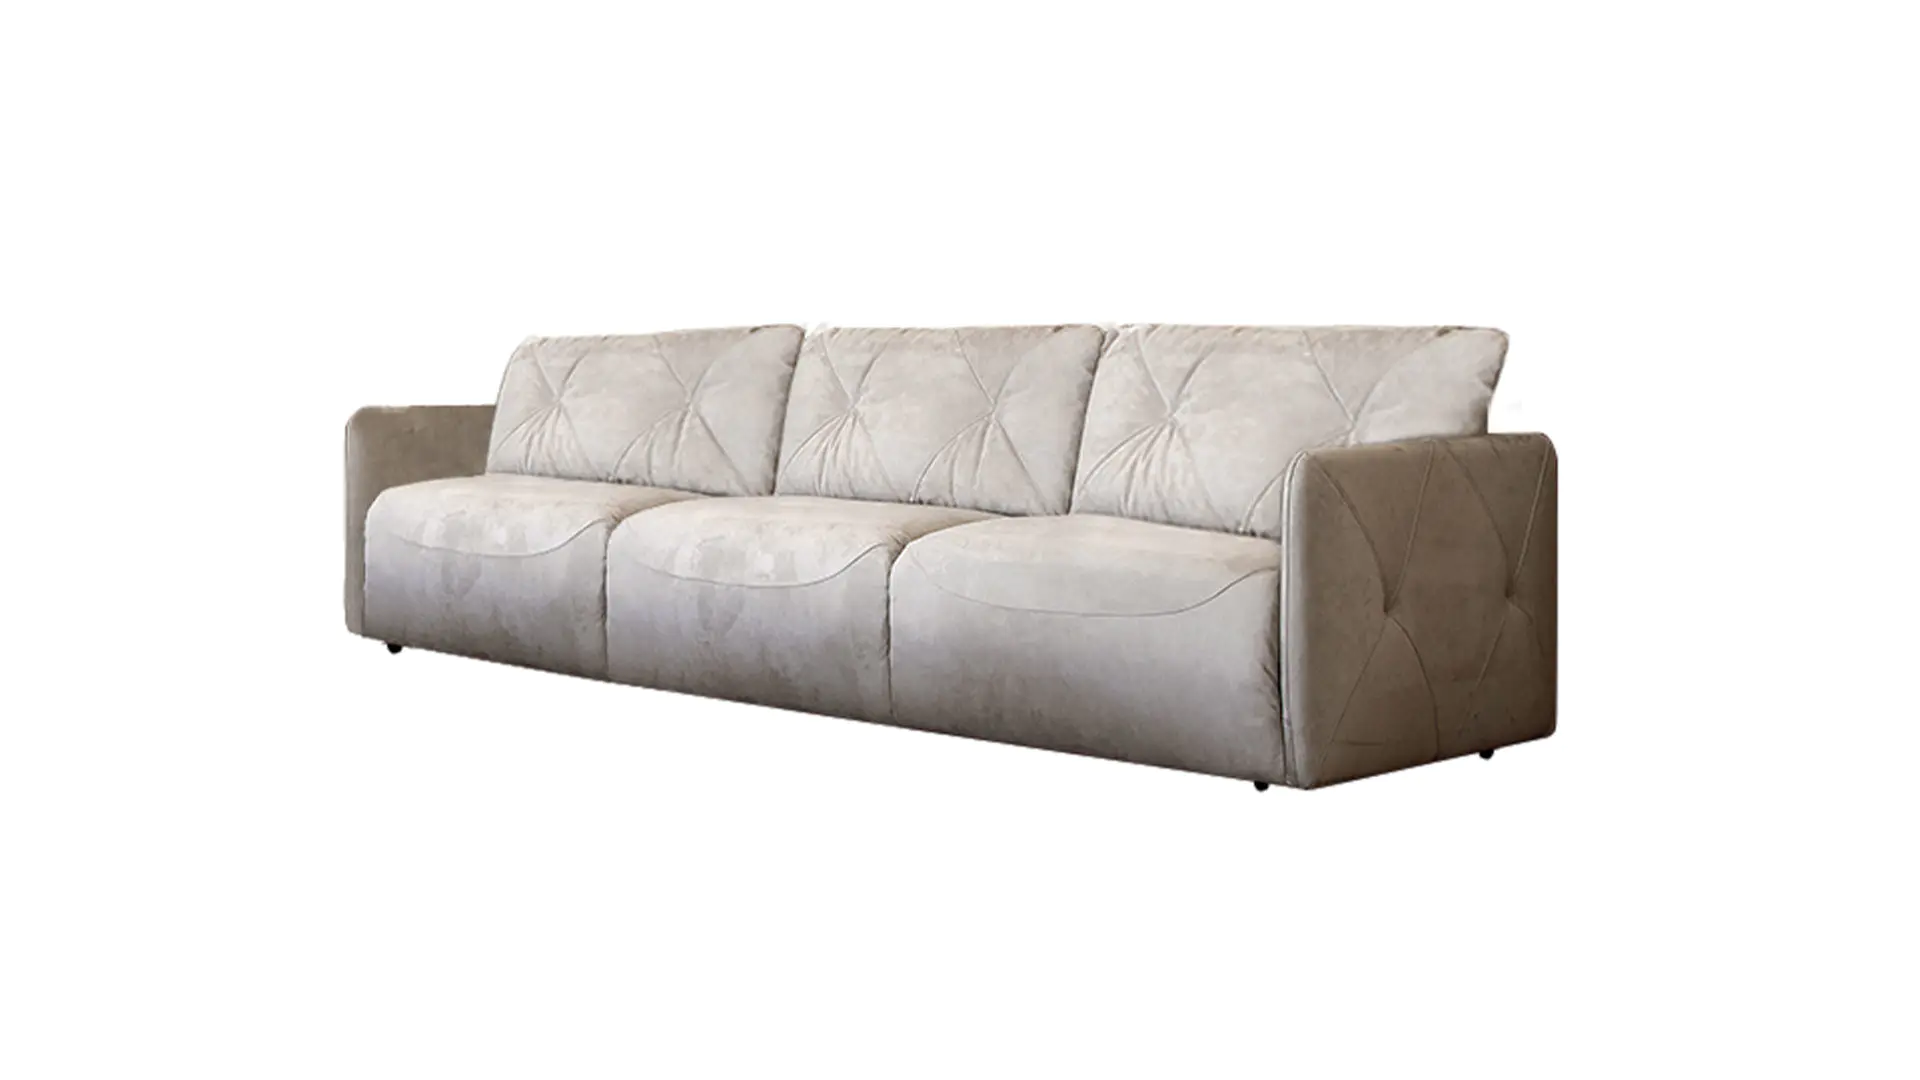 New Design Linen Velvet Fabric Upholstery Living Room Fabric Sofa Set Comfortable Tufted Modular Furniture